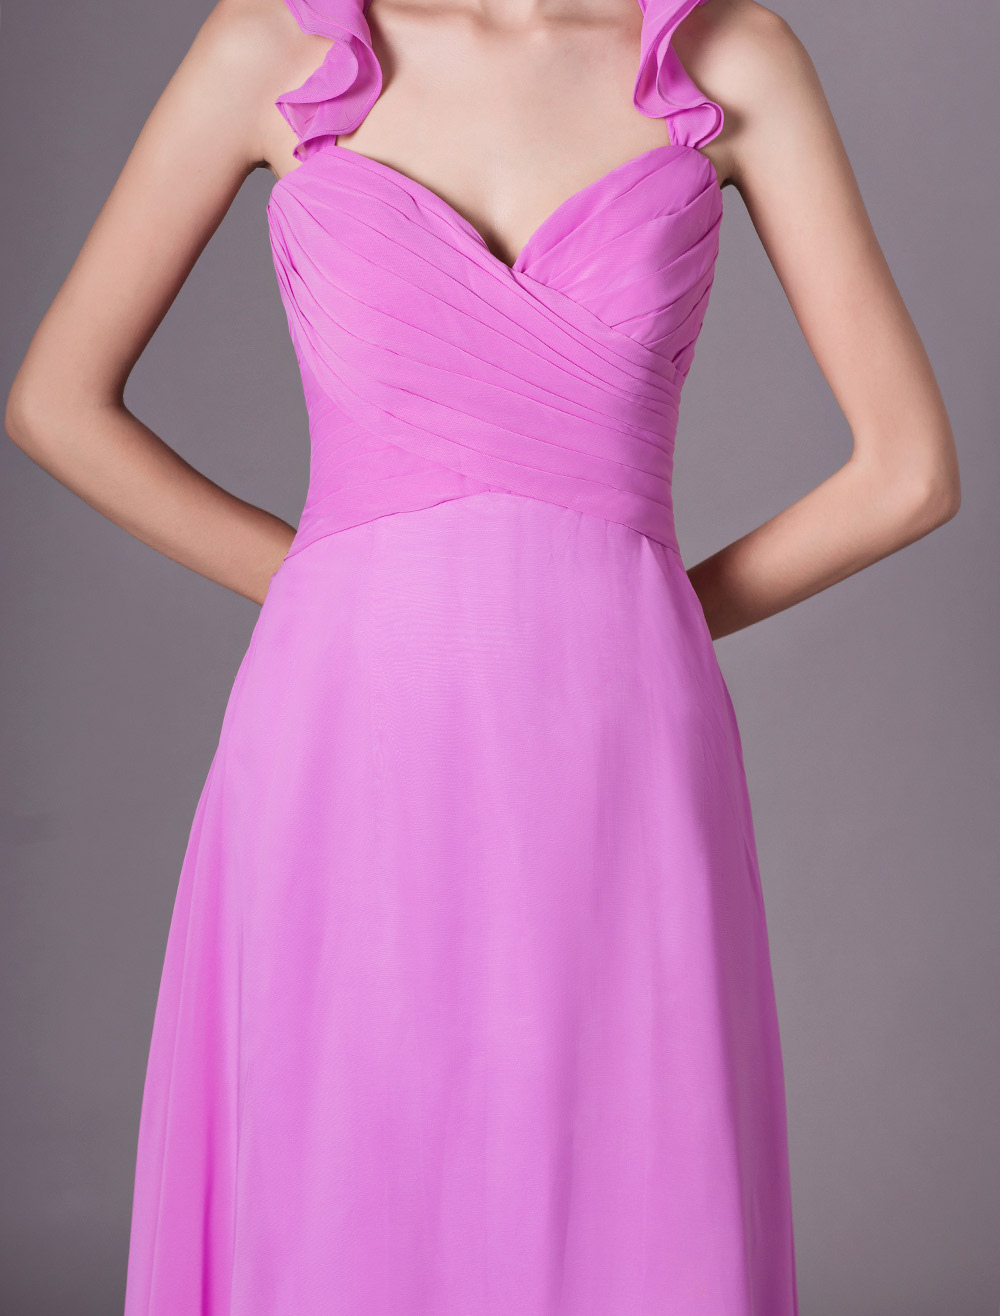 Fuchsia Pink Halter Bridesmaid Dress Ruffles A Line Floor Length ...